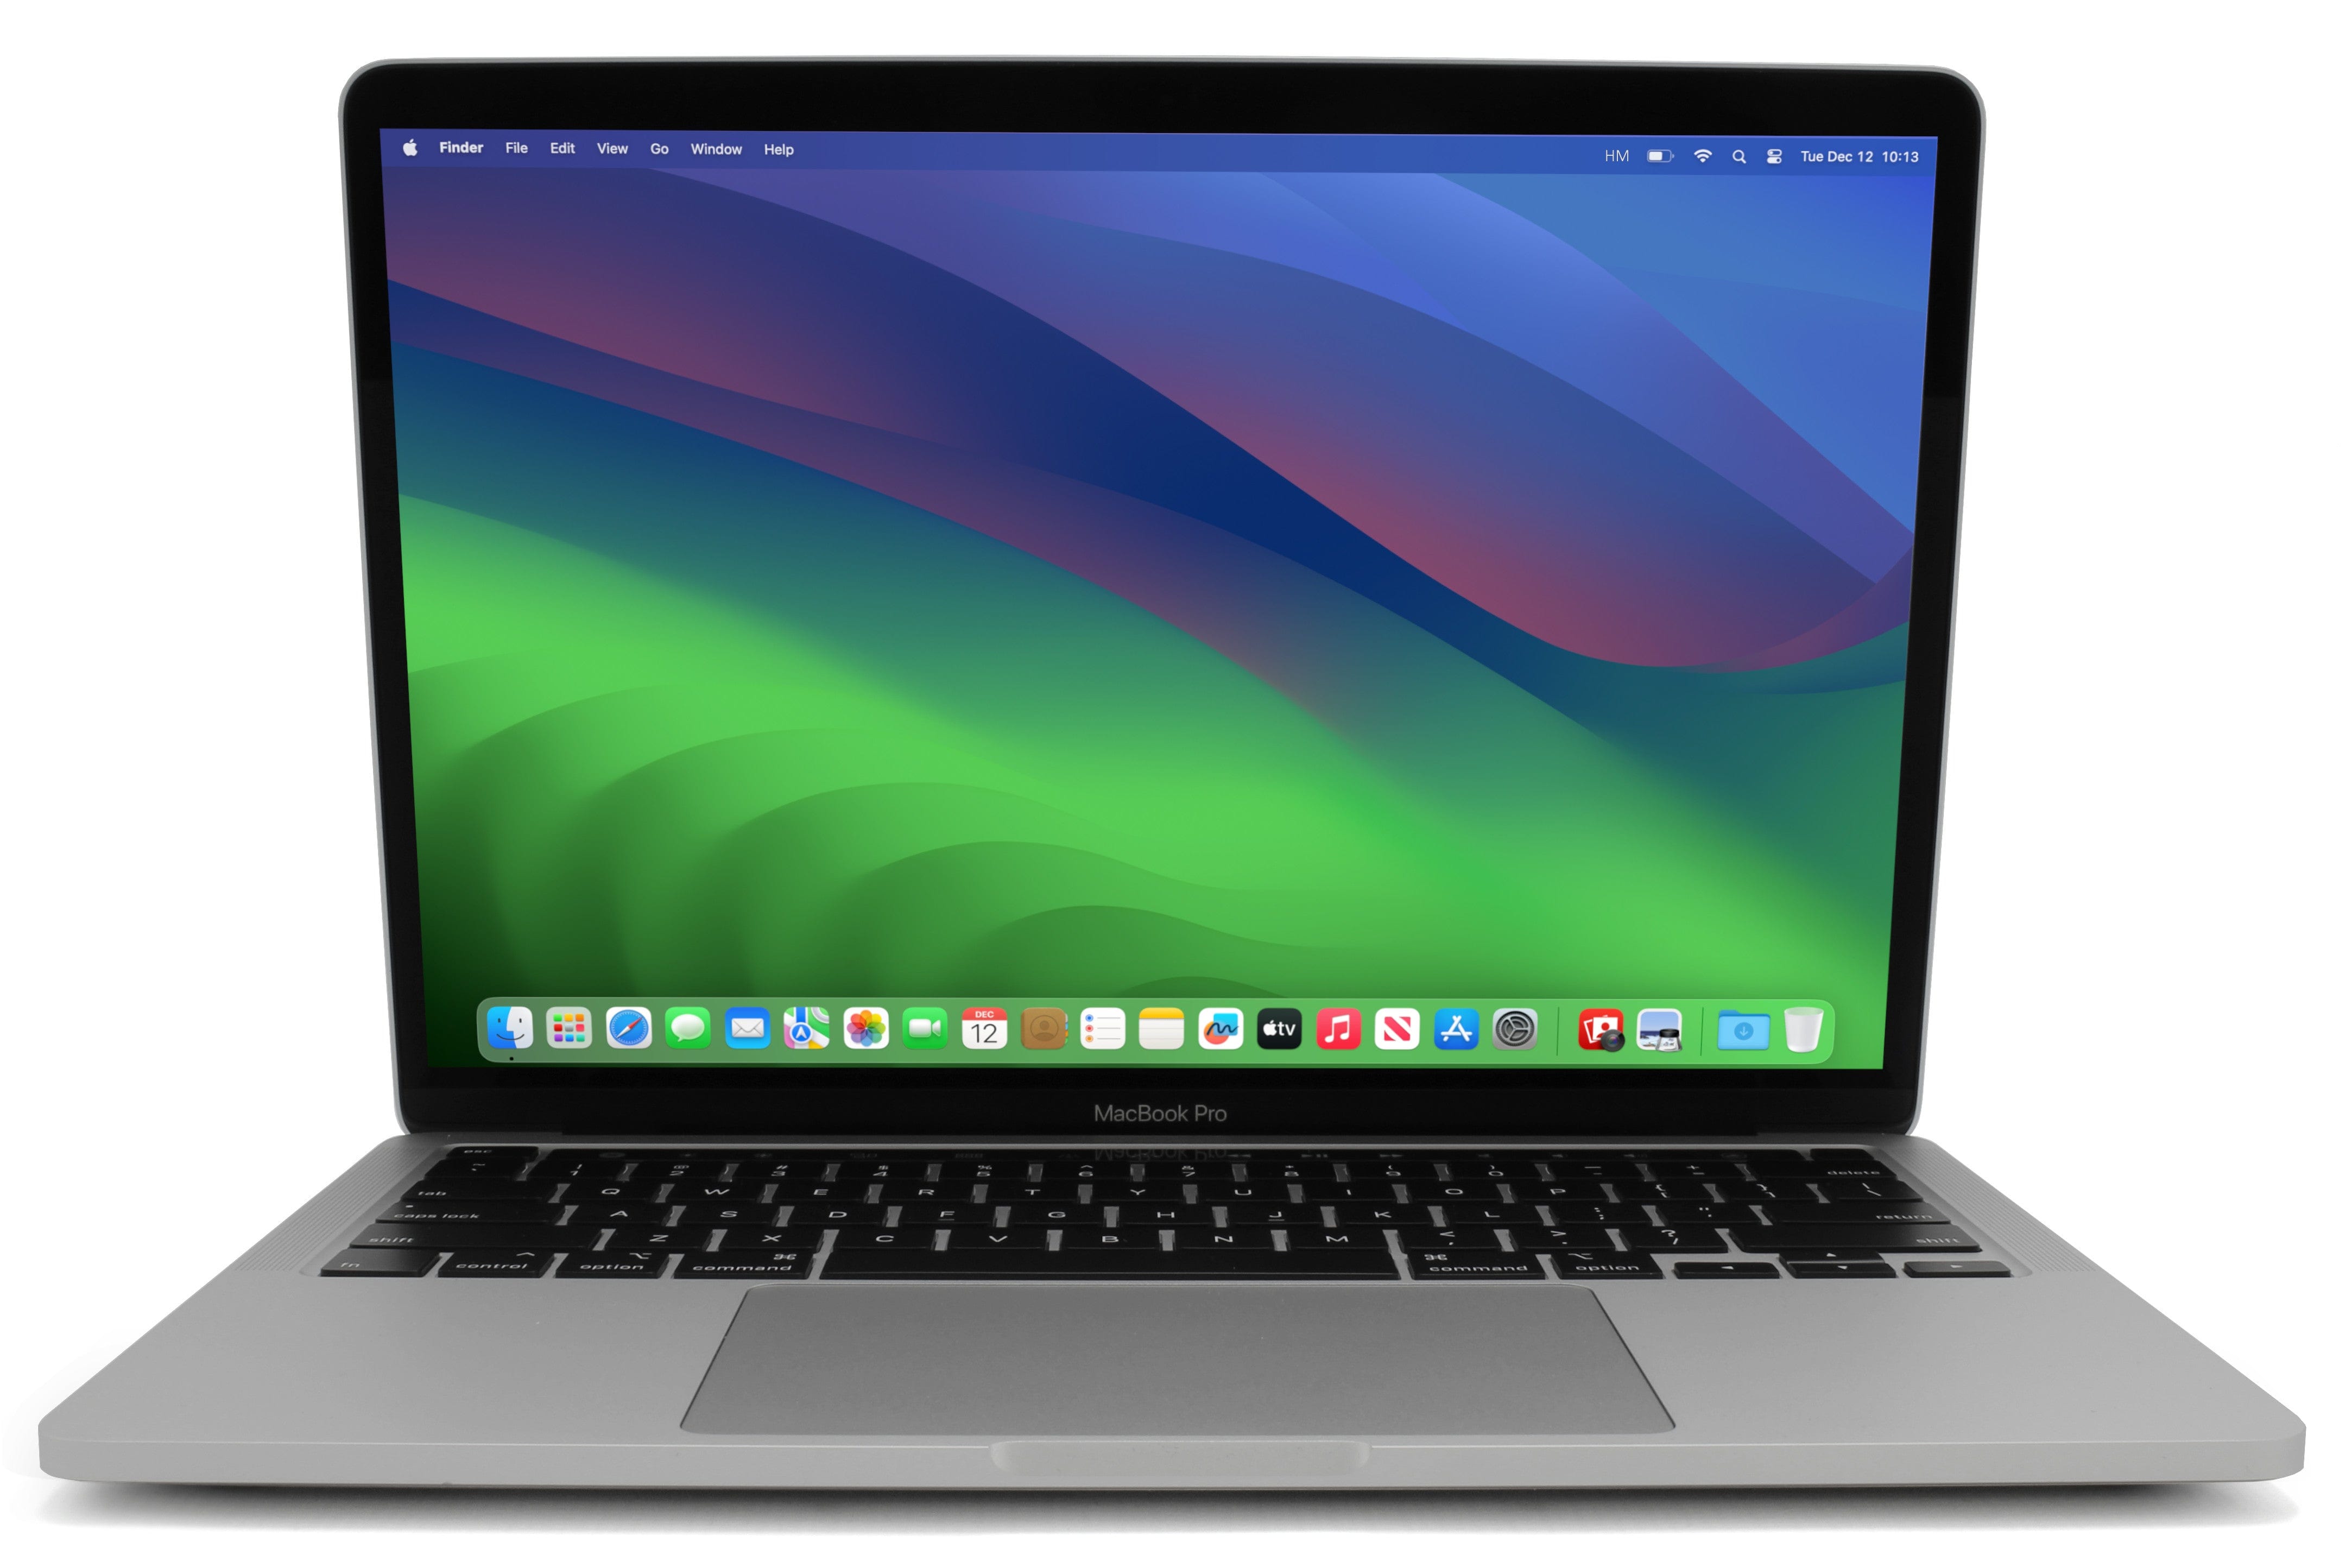 MacBook Pro 13-inch Core i7 2.3GHz (Silver, 2020) - Good